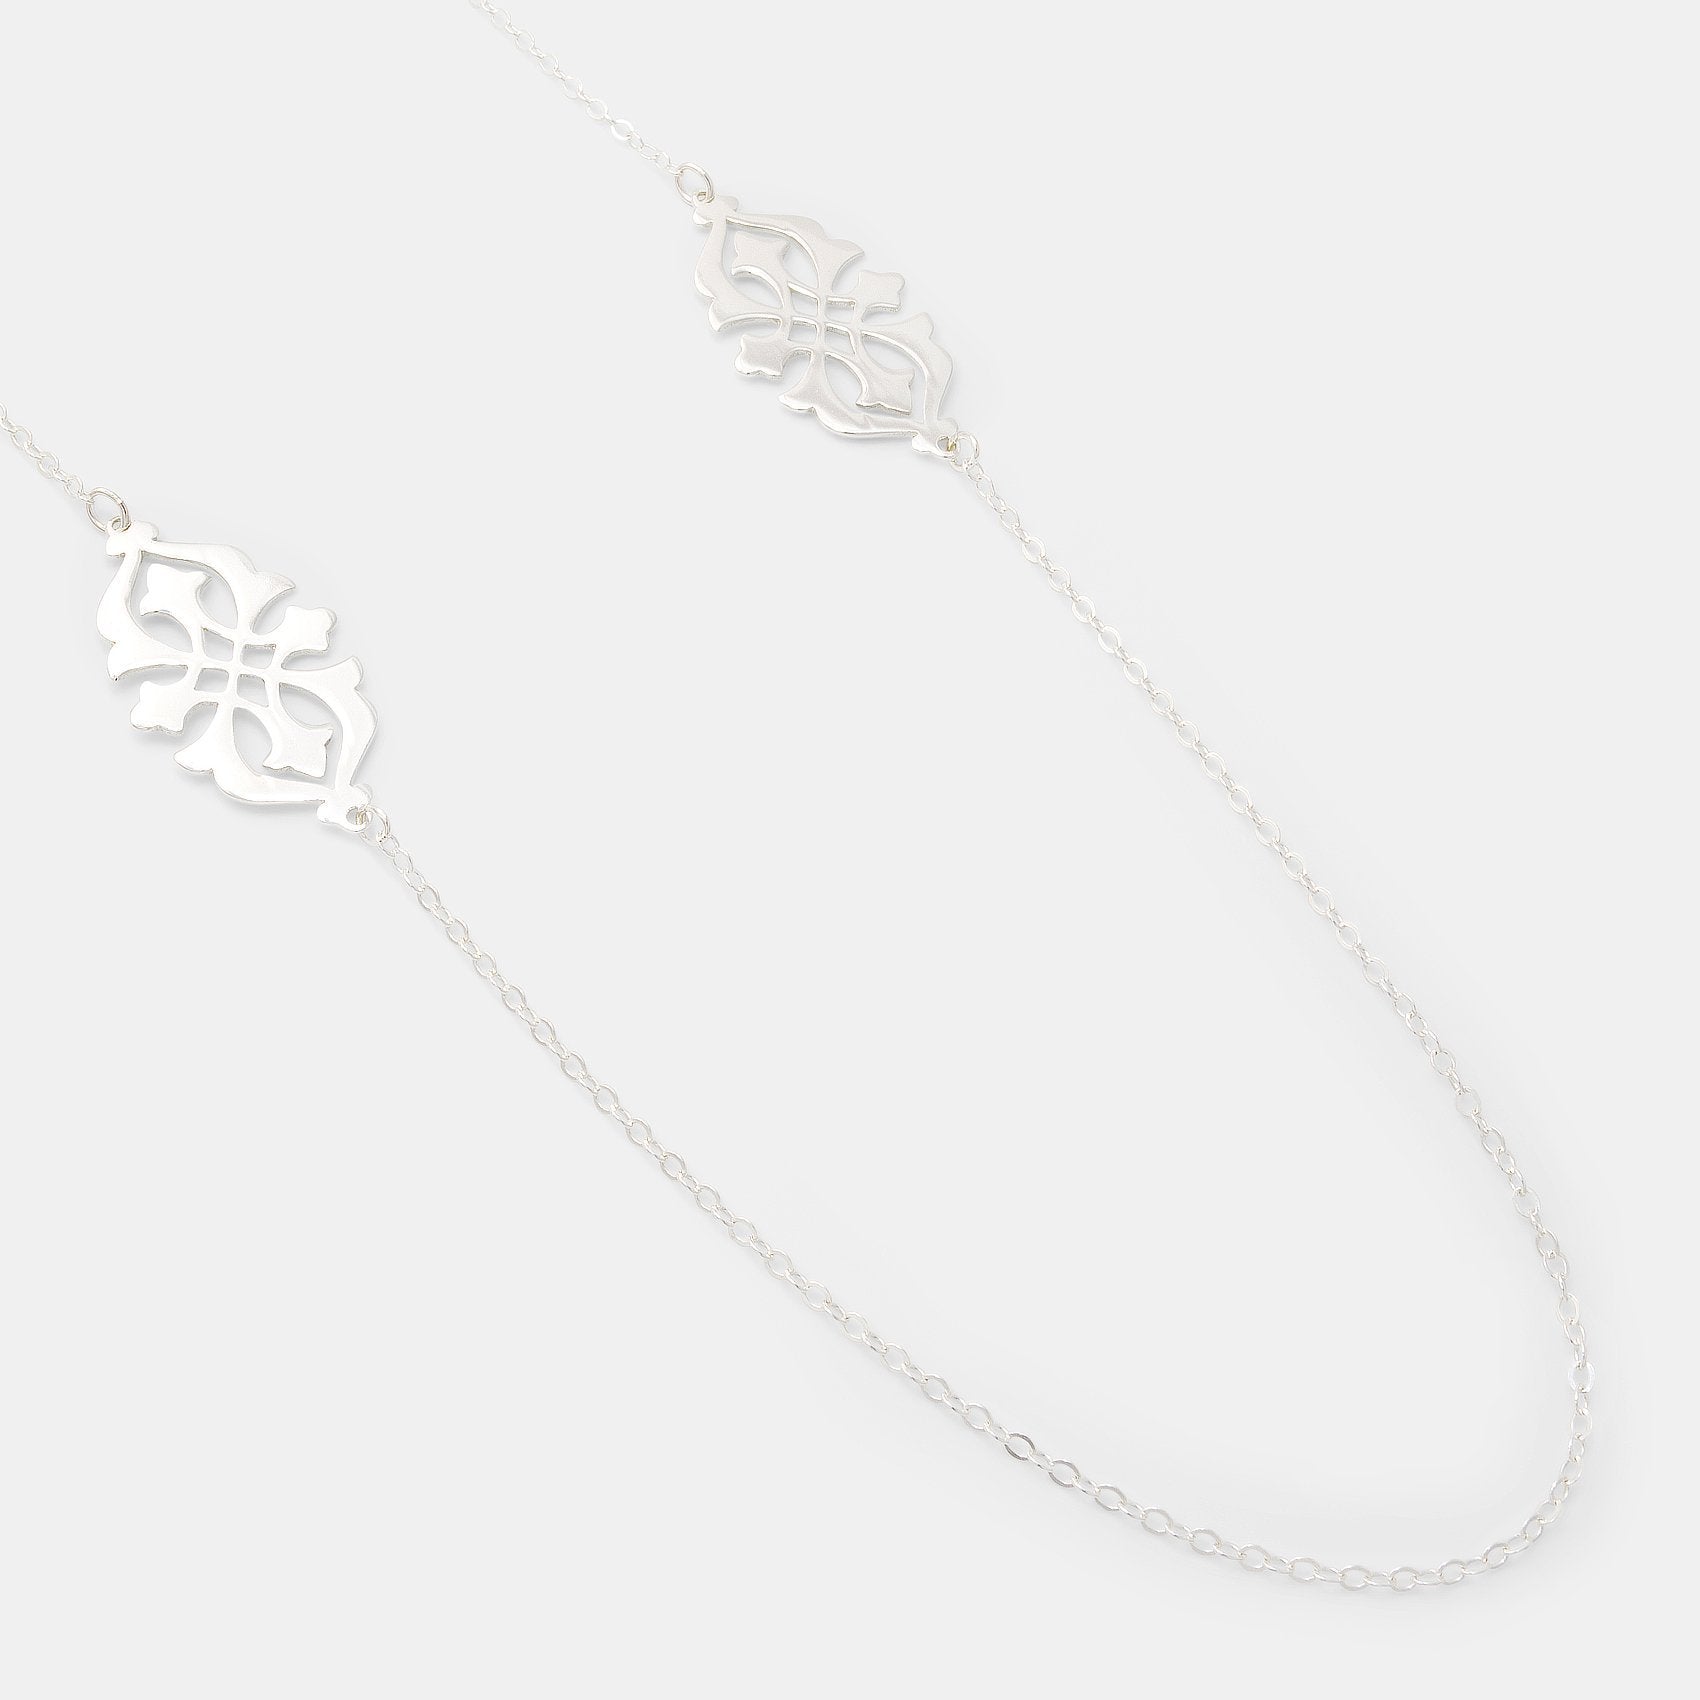 Arabesque long necklace - Simone Walsh Jewellery Australia